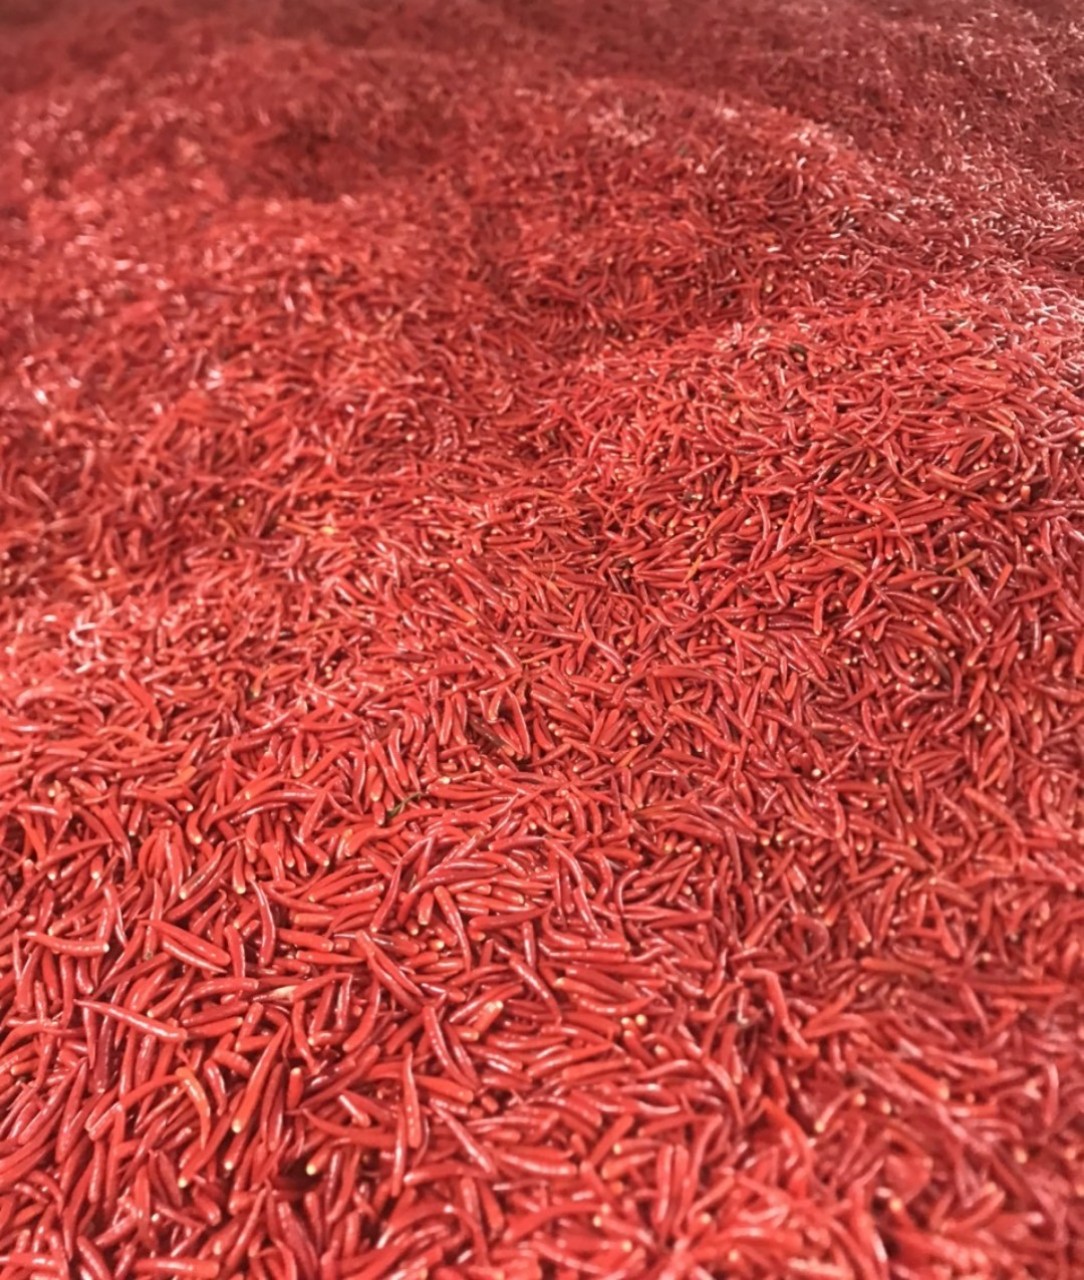 Khue Star's red chili farm